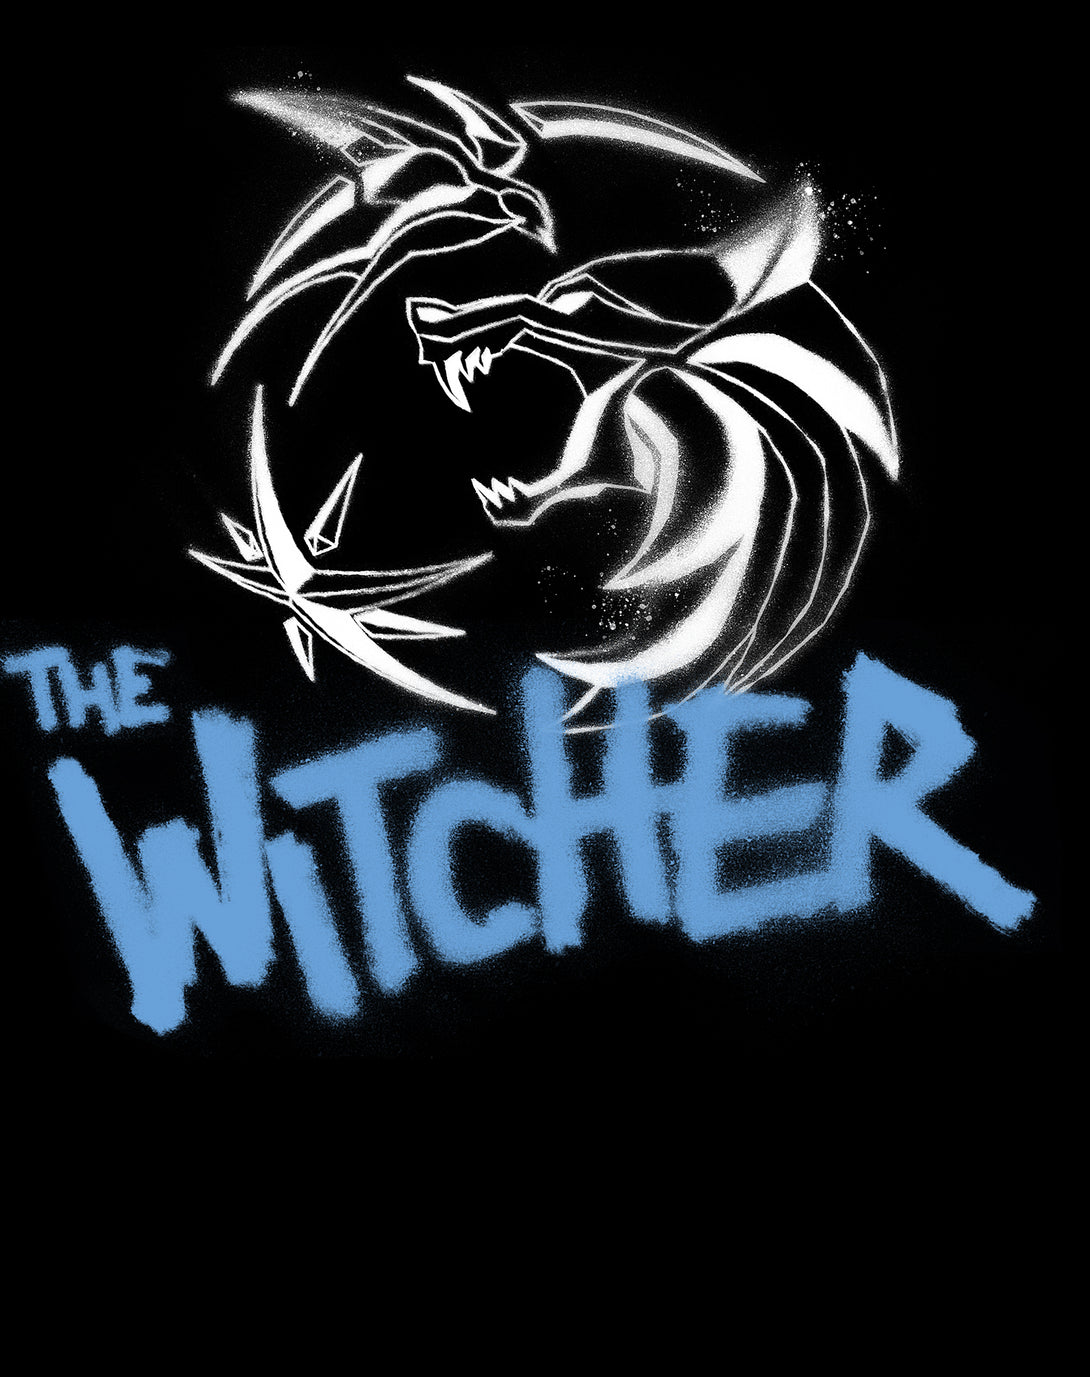 The Witcher Logo Stencil Slayer Official Women's T-Shirt Black - Urban Species Design Close Up